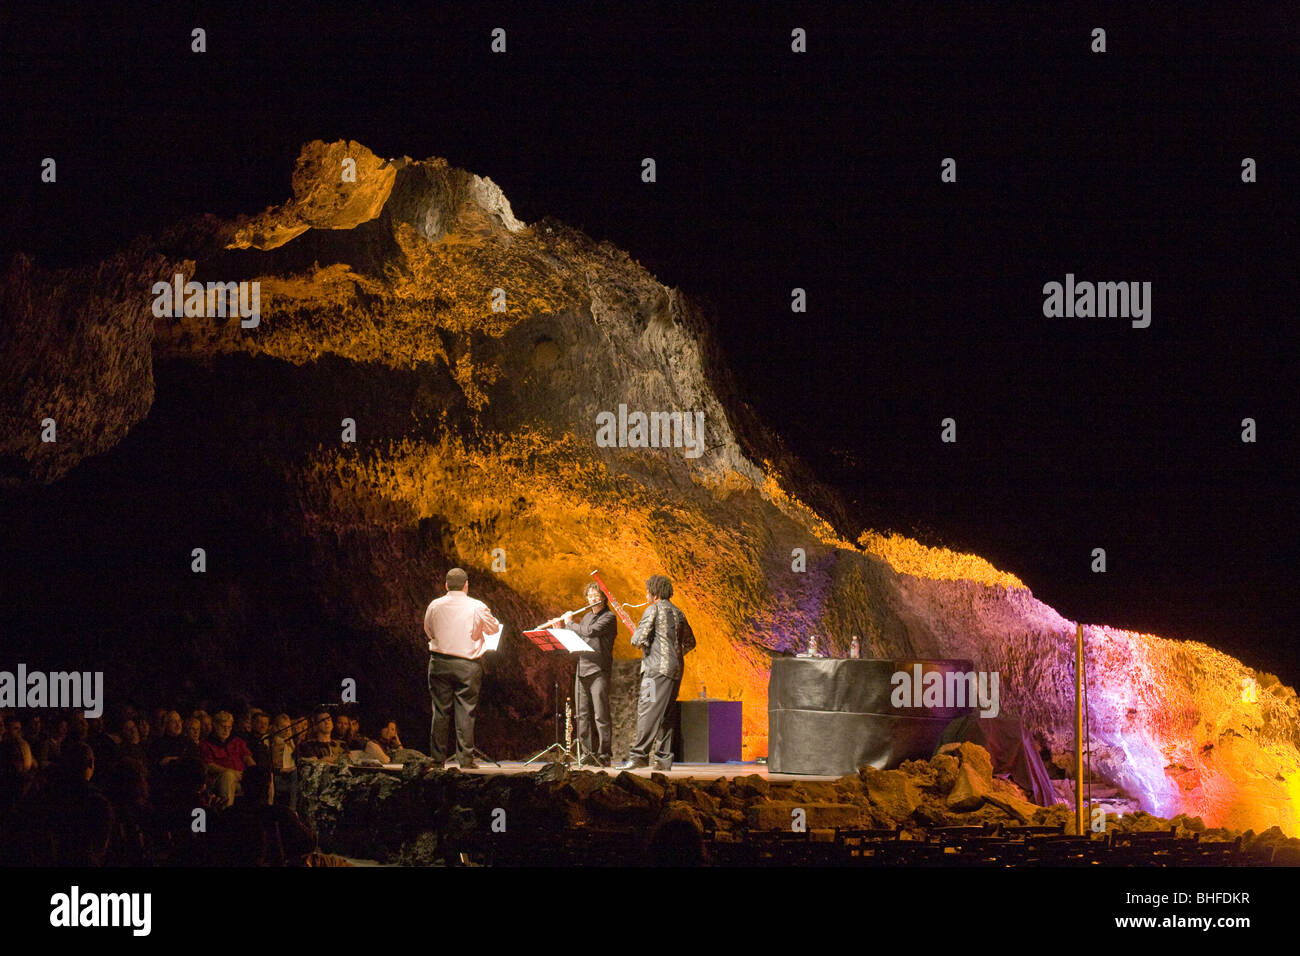 Concert in volcanic cave, Cueva de los Verdes, concert hall, architect Cesar Manrique, Lanzarote, Canary Islands, Spain, Europe Stock Photo